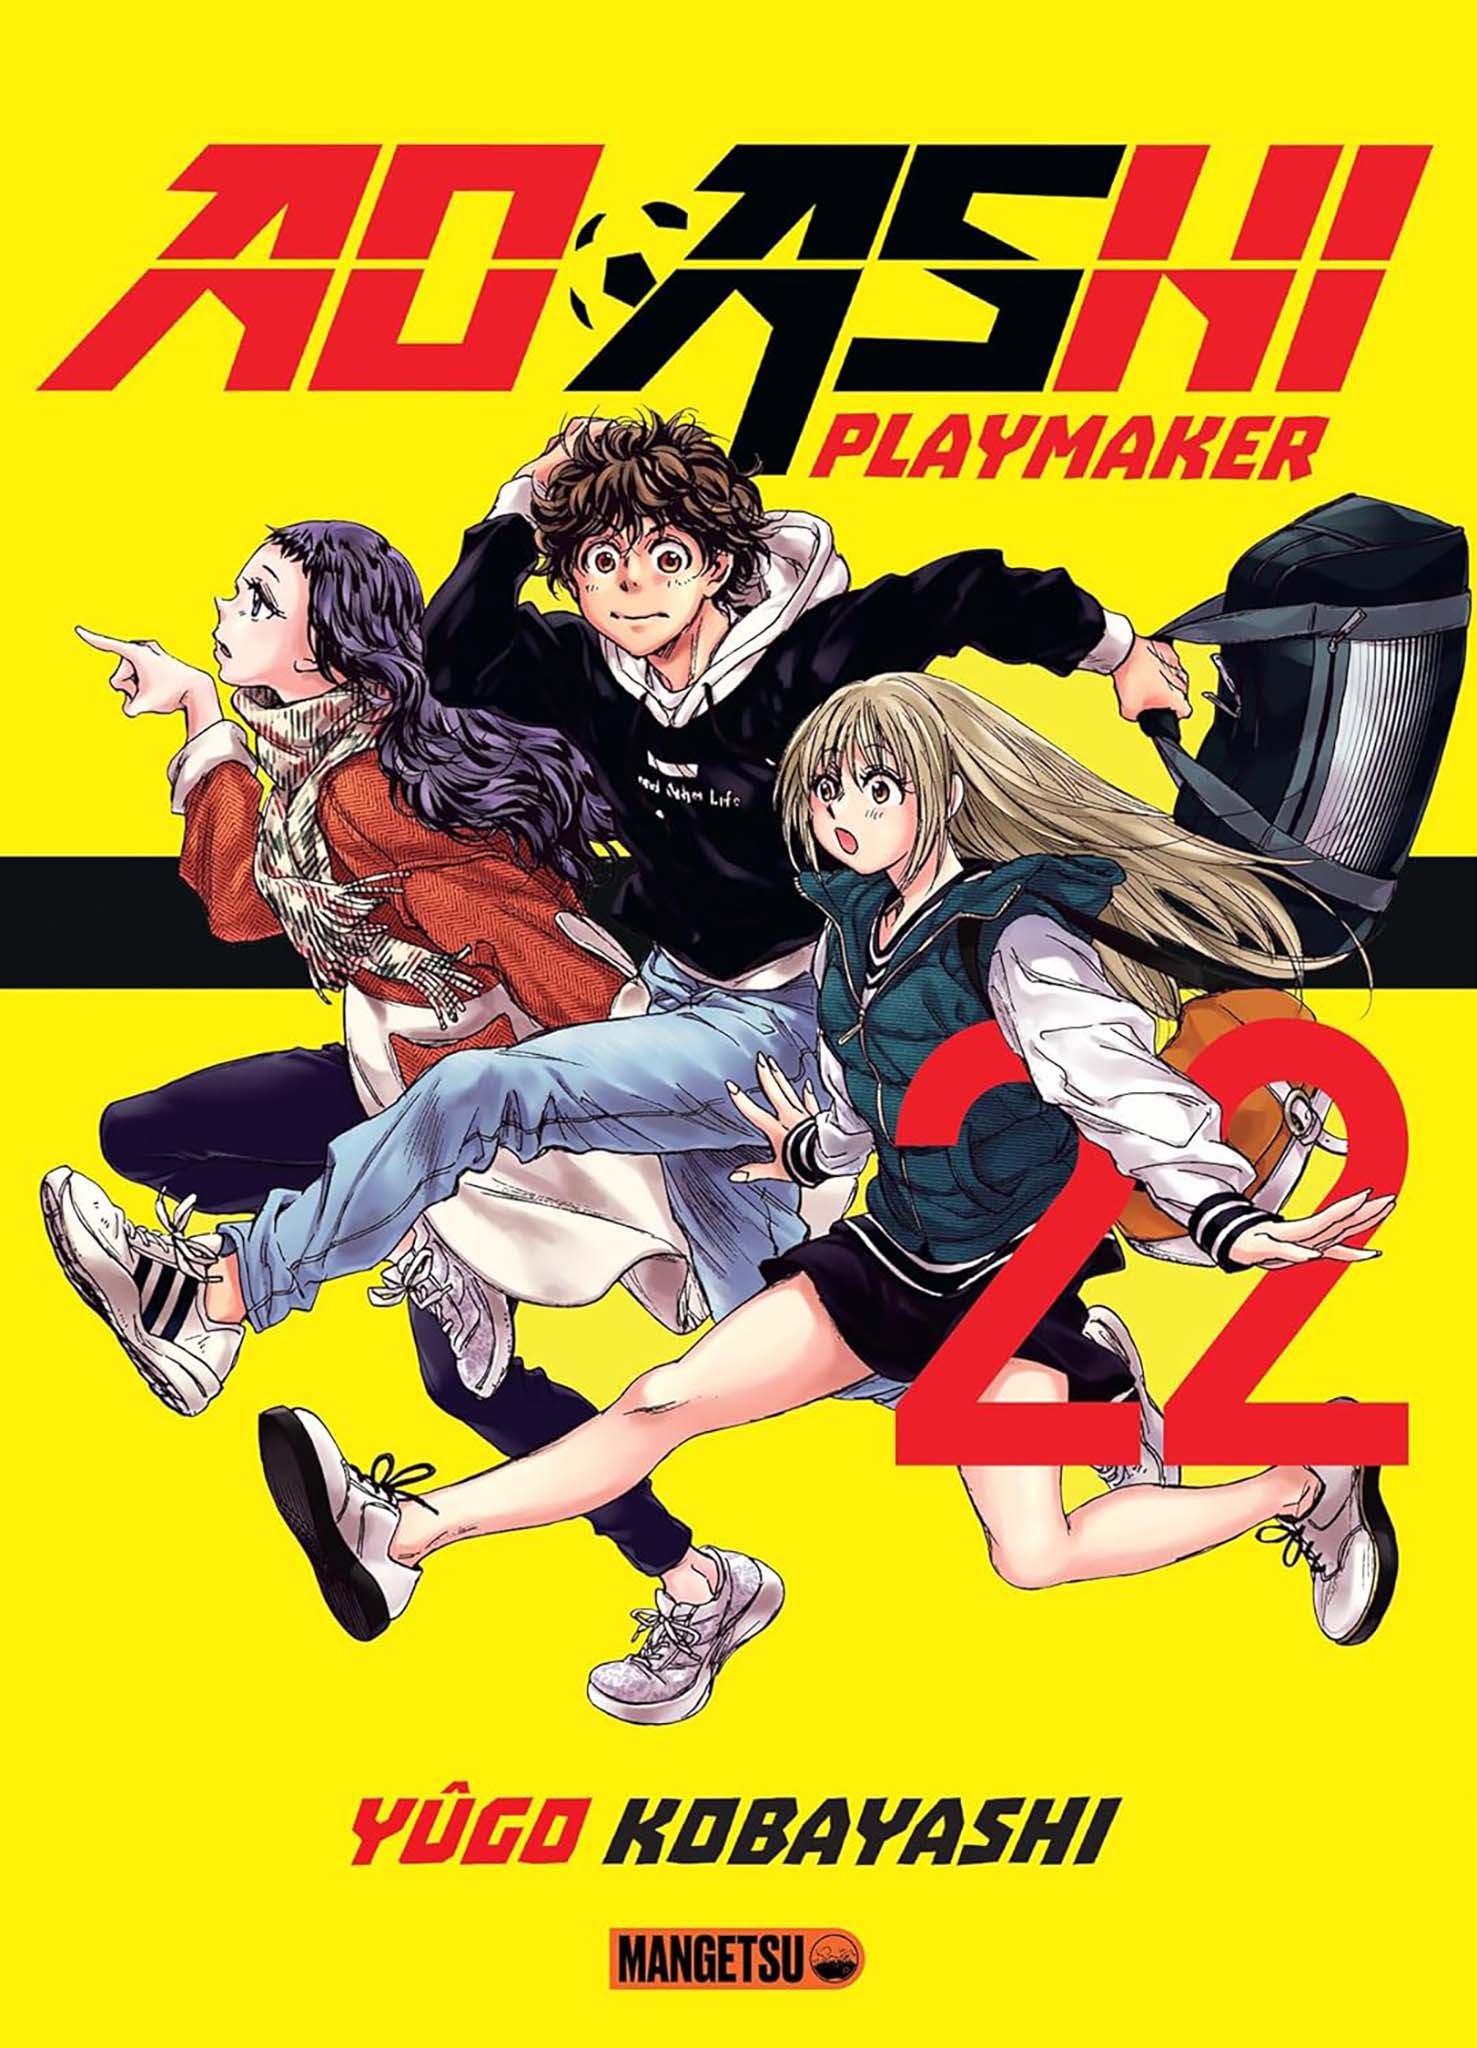 Tome 22 du manga AO ASHI.